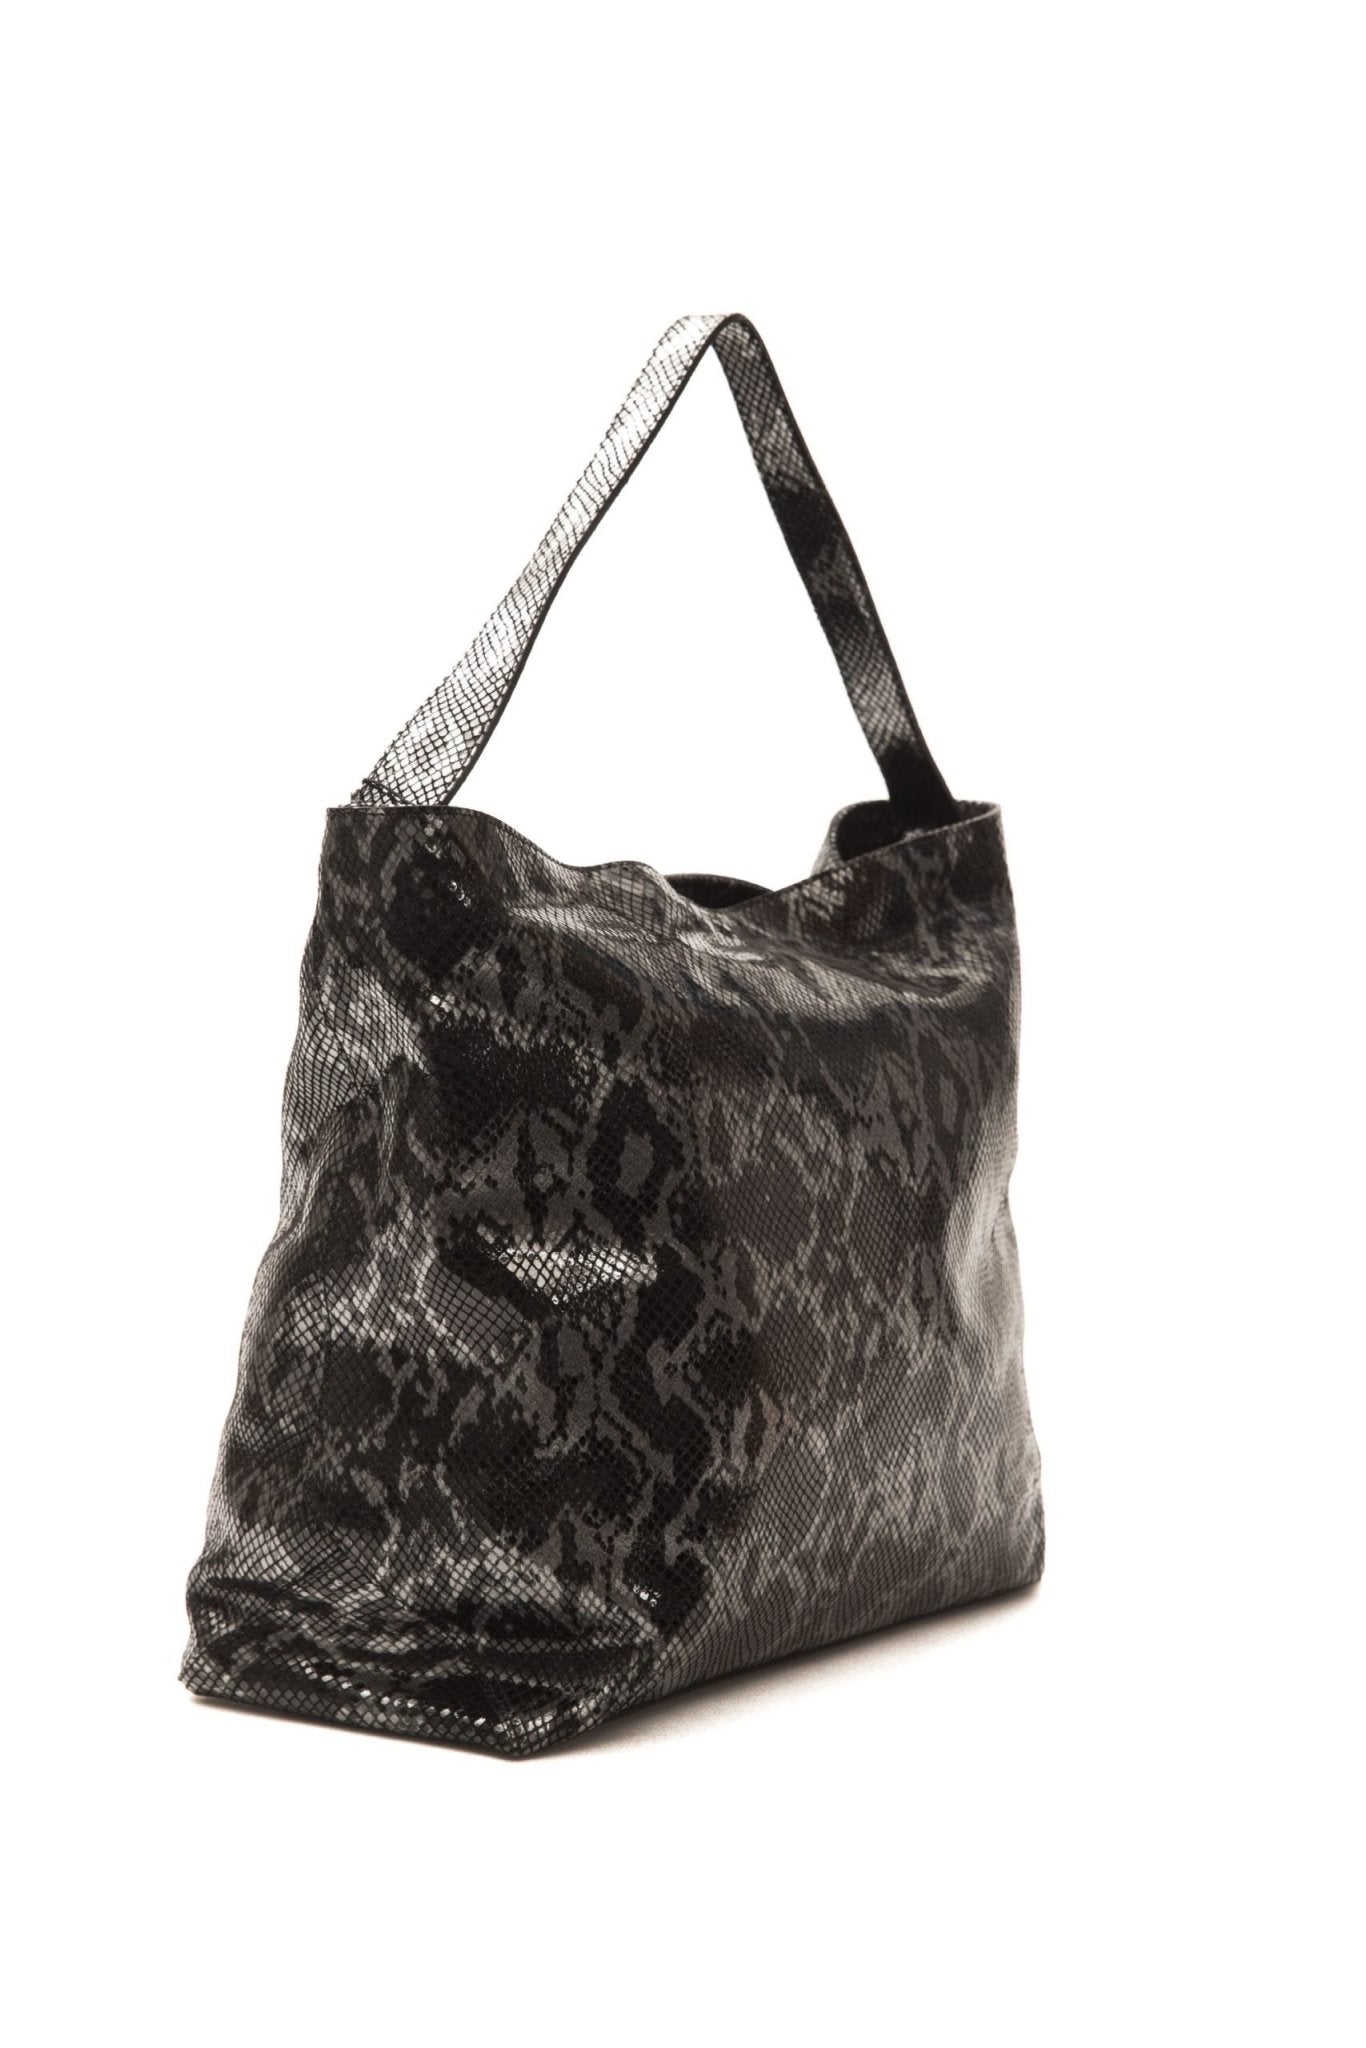 Pompei Donatella Gray Leather Shoulder Bag - Fizigo